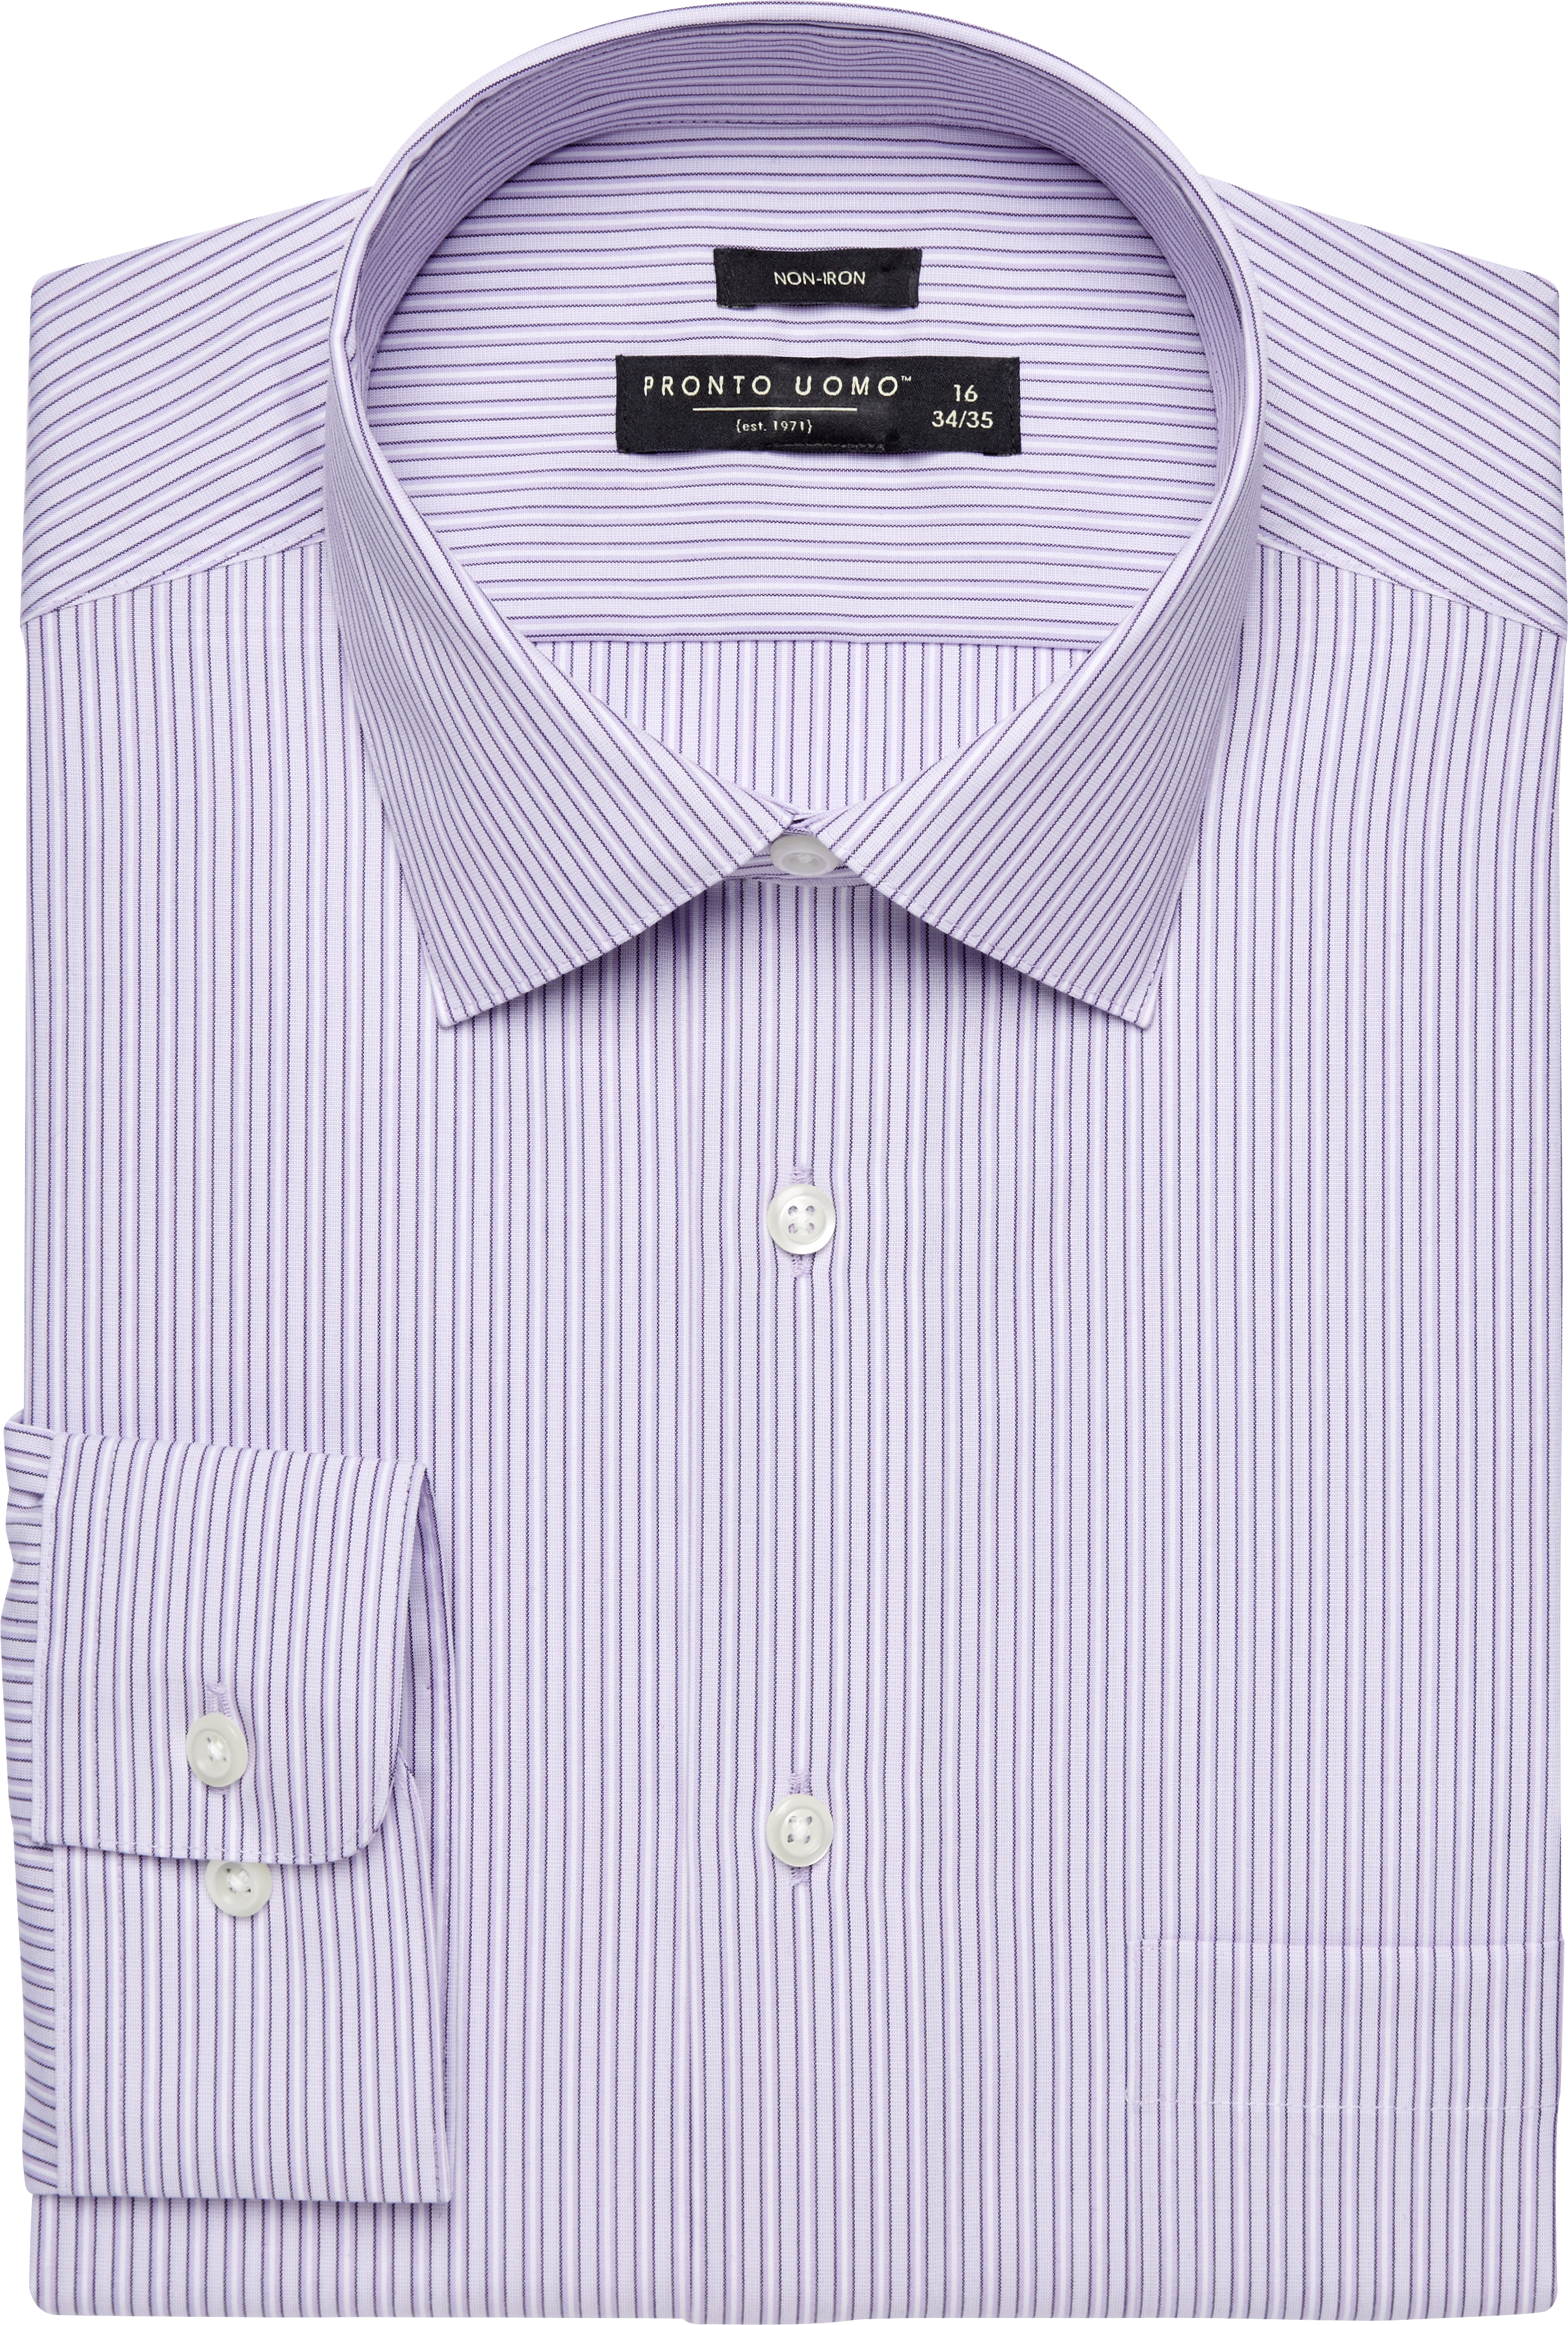 Pronto Uomo Lavender Stripe Dress Shirt - Men's Sale | Men's Wearhouse